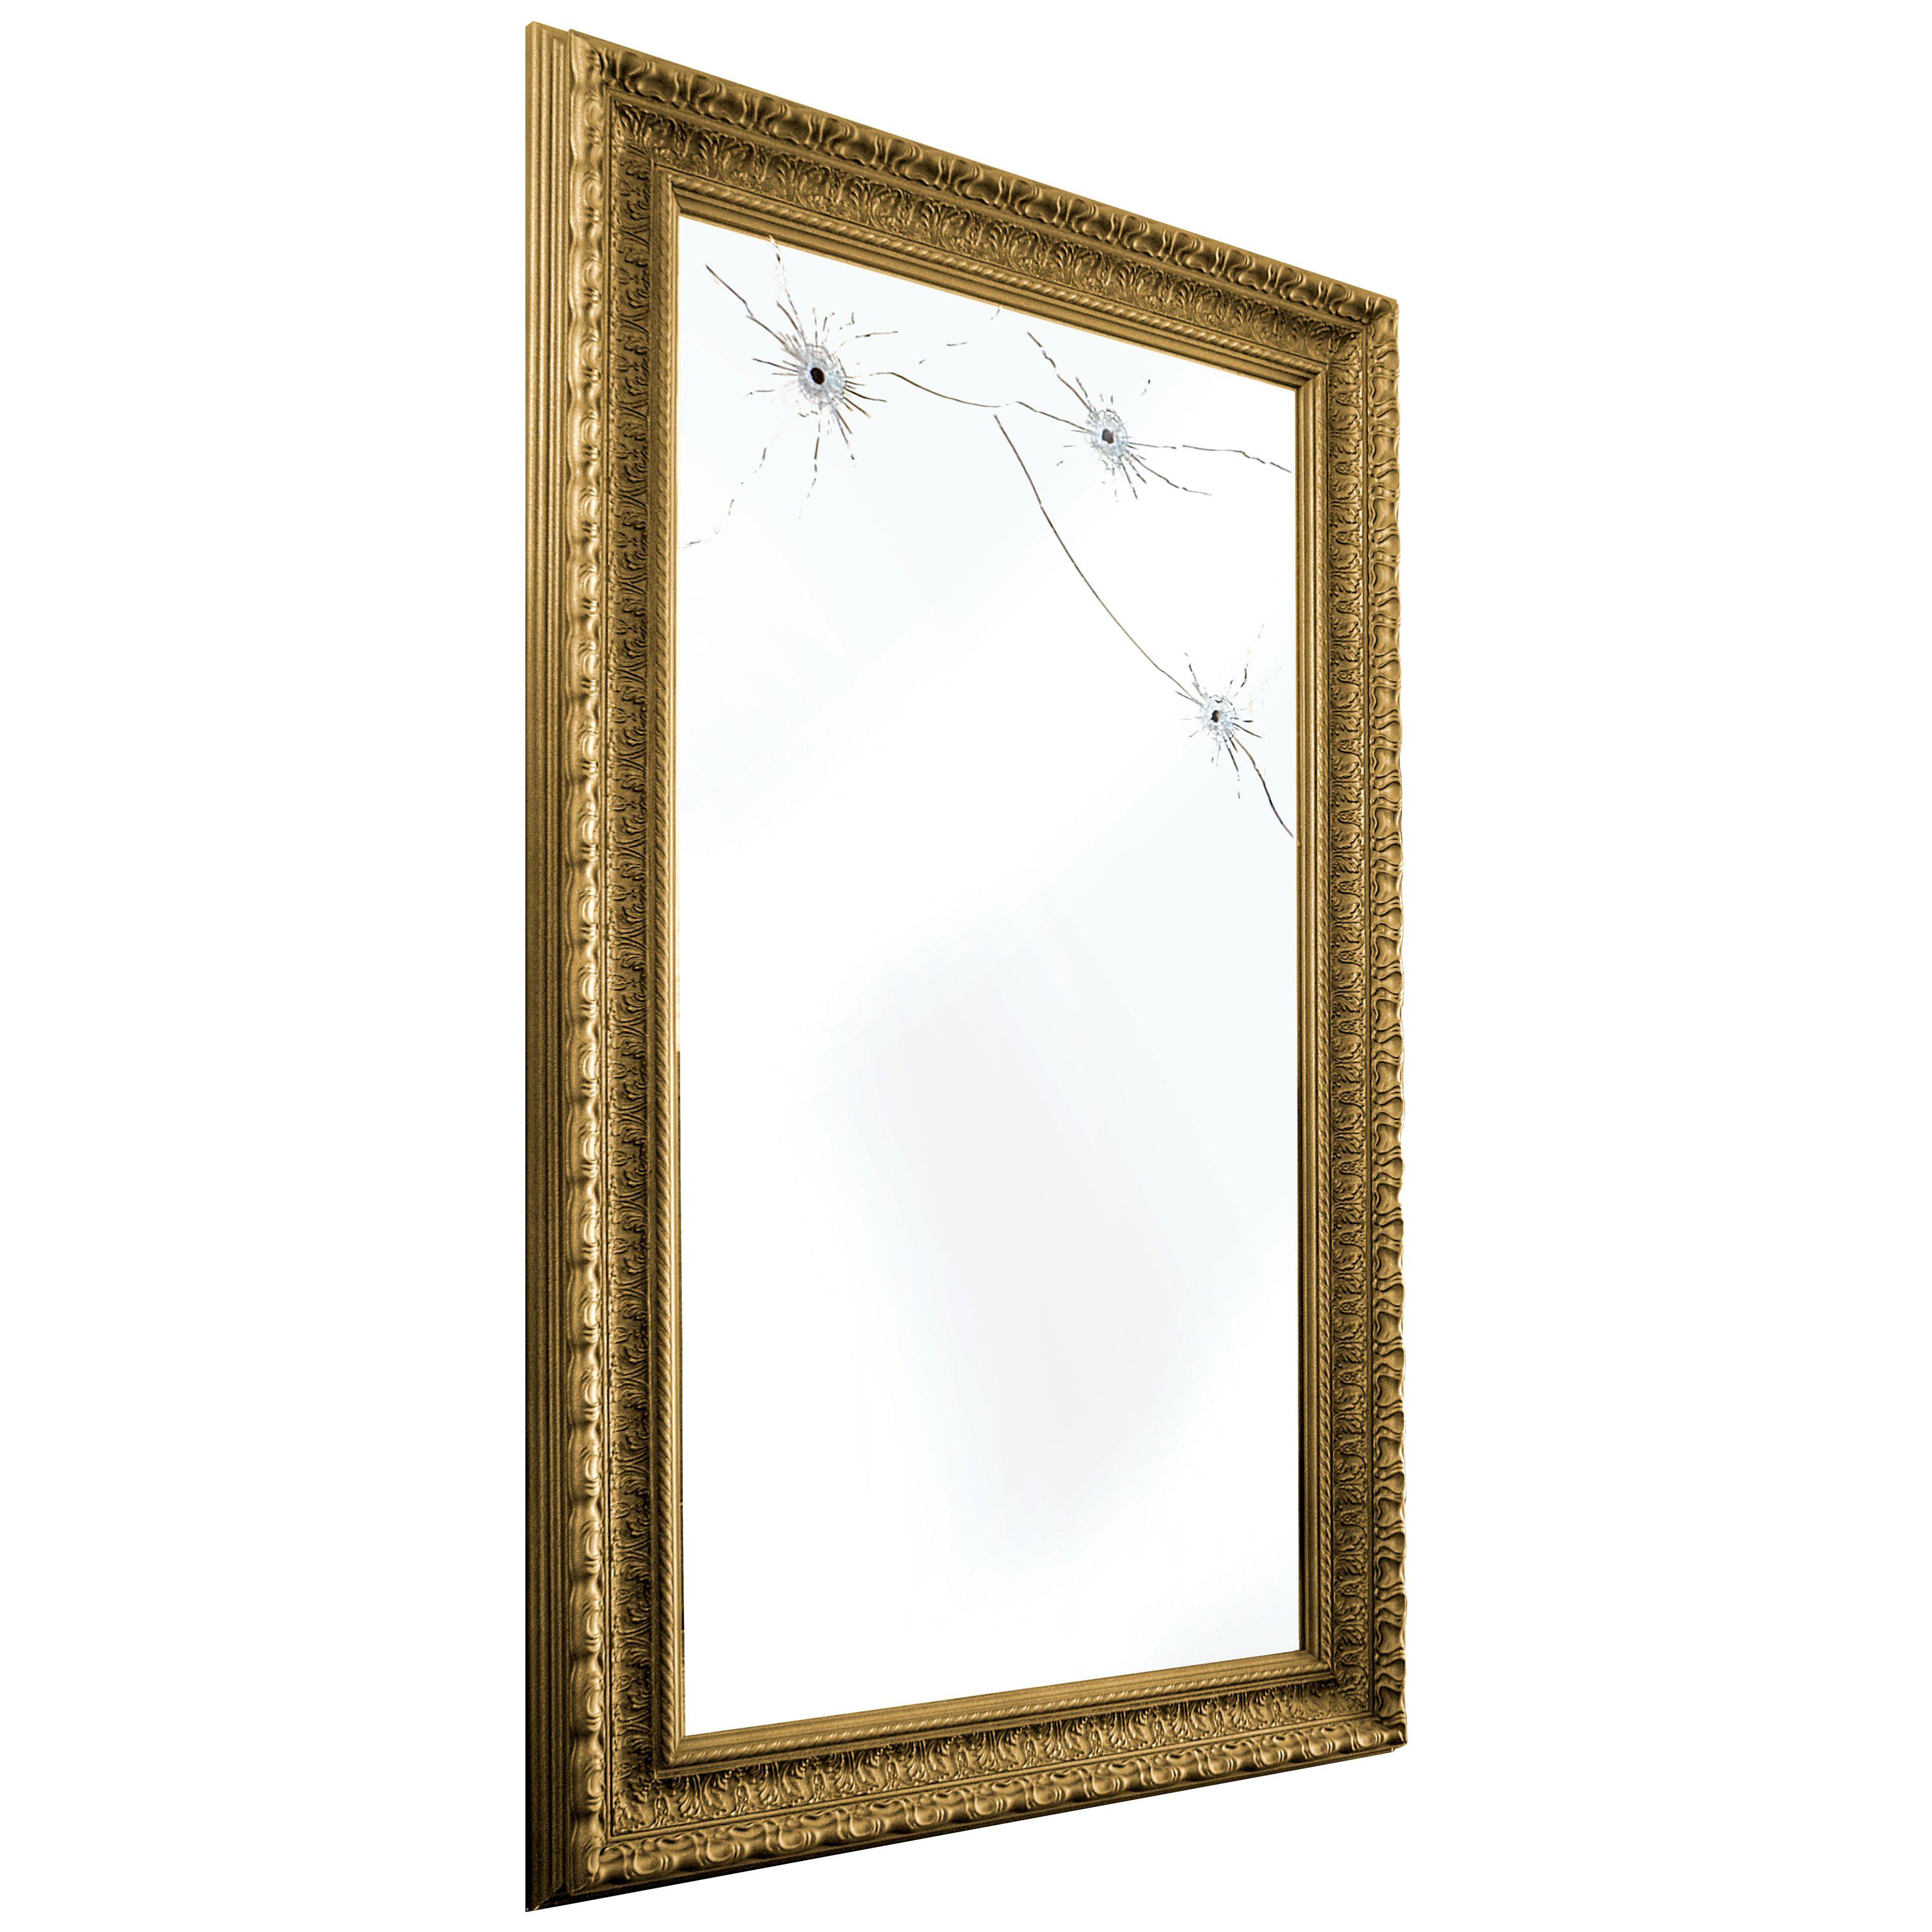  Wall Floor Mirror Full-Length Gold Classic Frame Rectangular Collectible Design